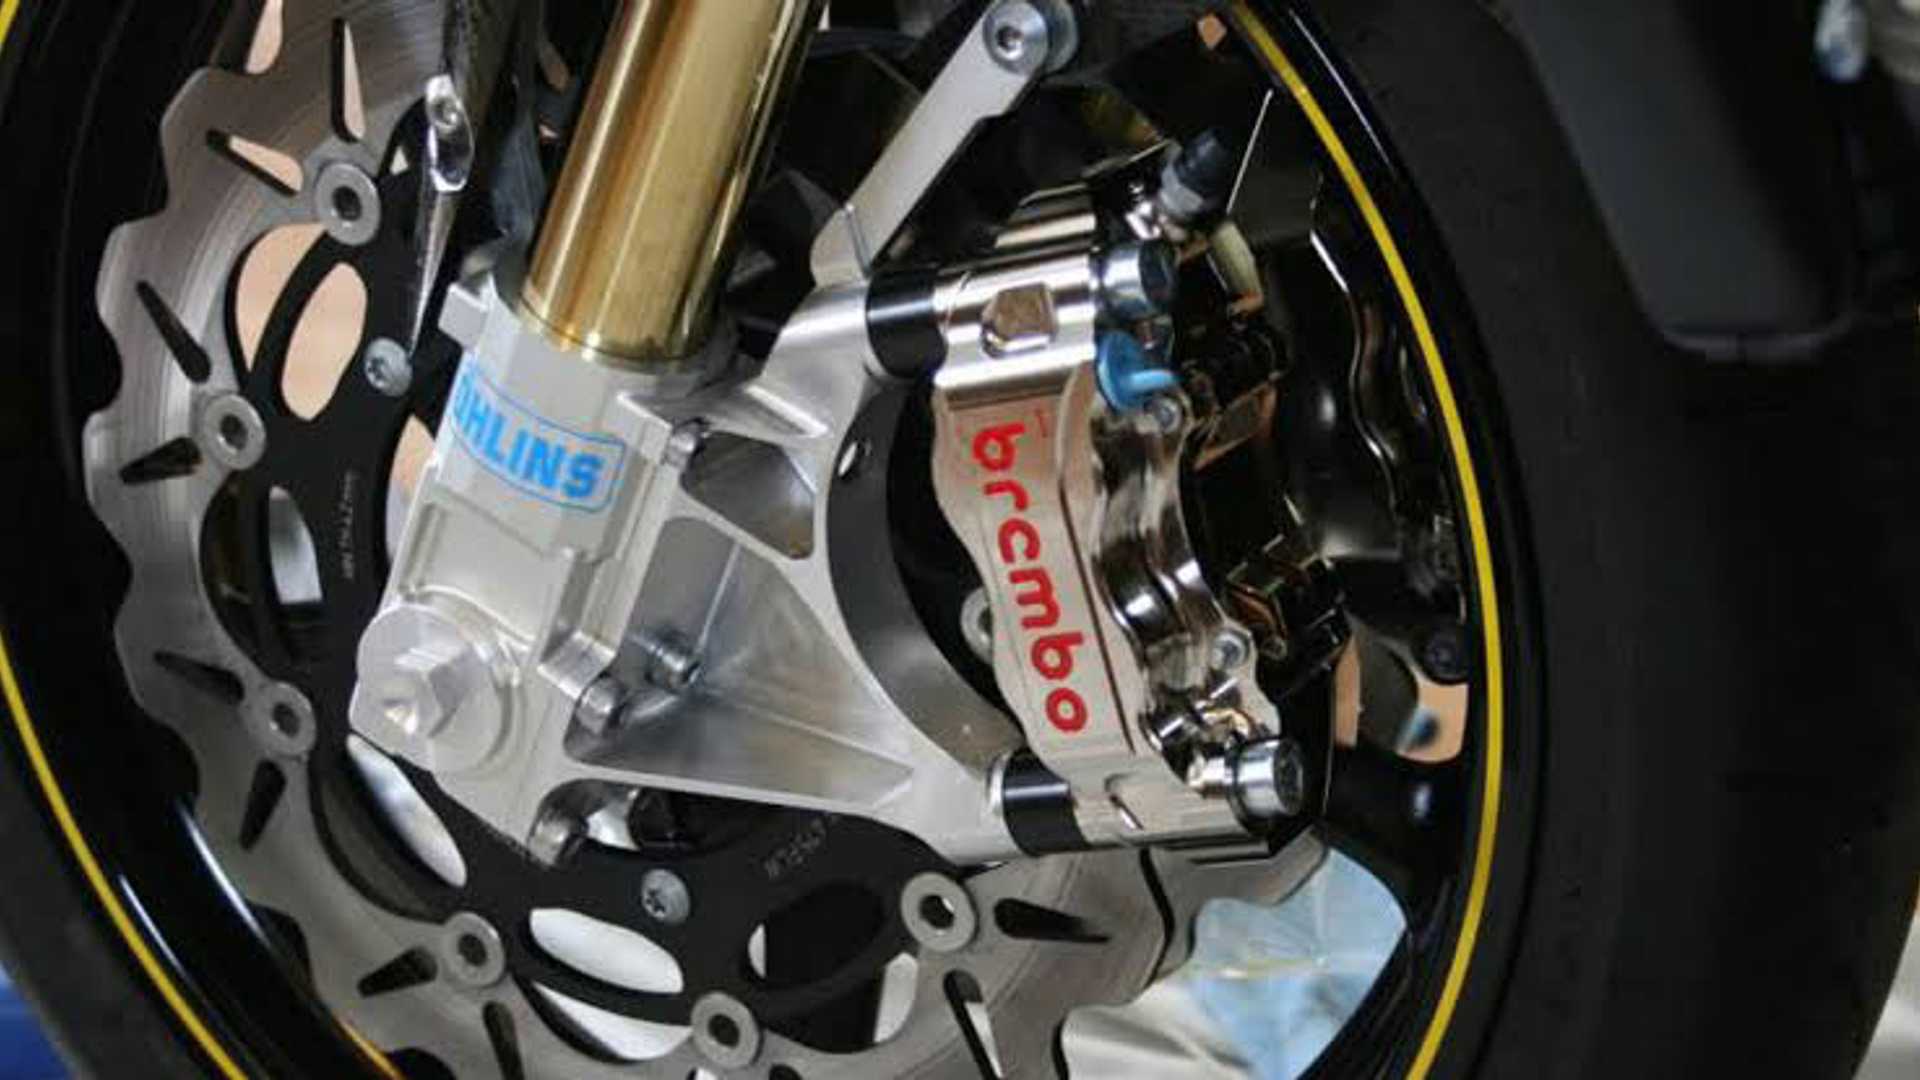 Recall do freio Brembo atinge 820 motos Ducati no Brasil - UOL Carros